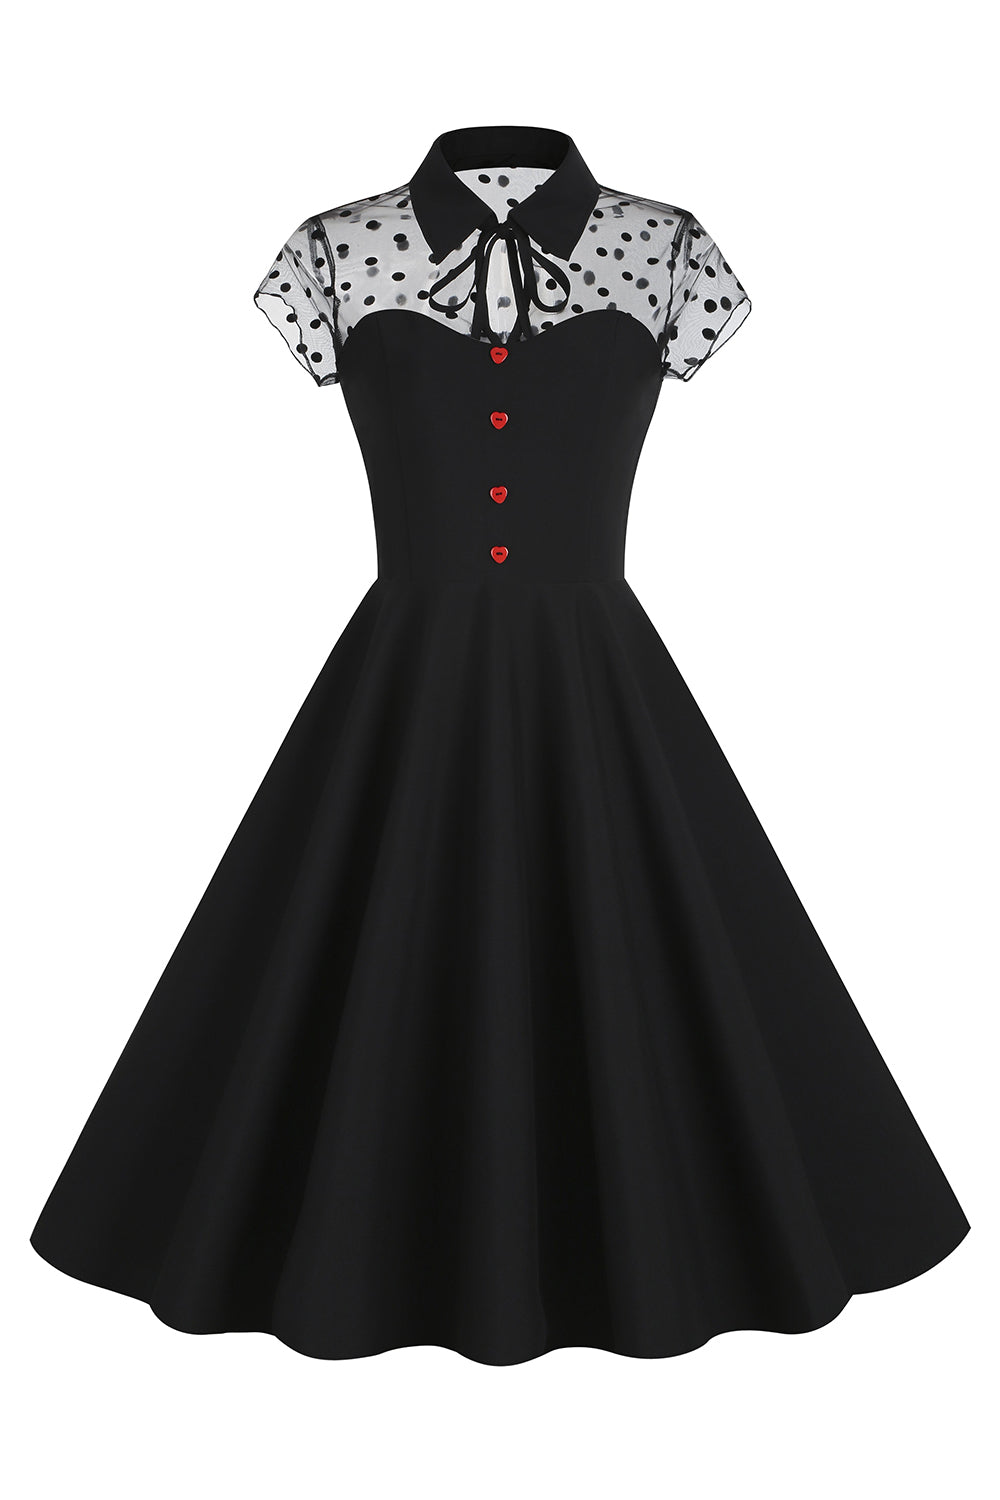 Zapaka Women Black Vintage Dress Hepburn Style 1950s Dress with Short ...